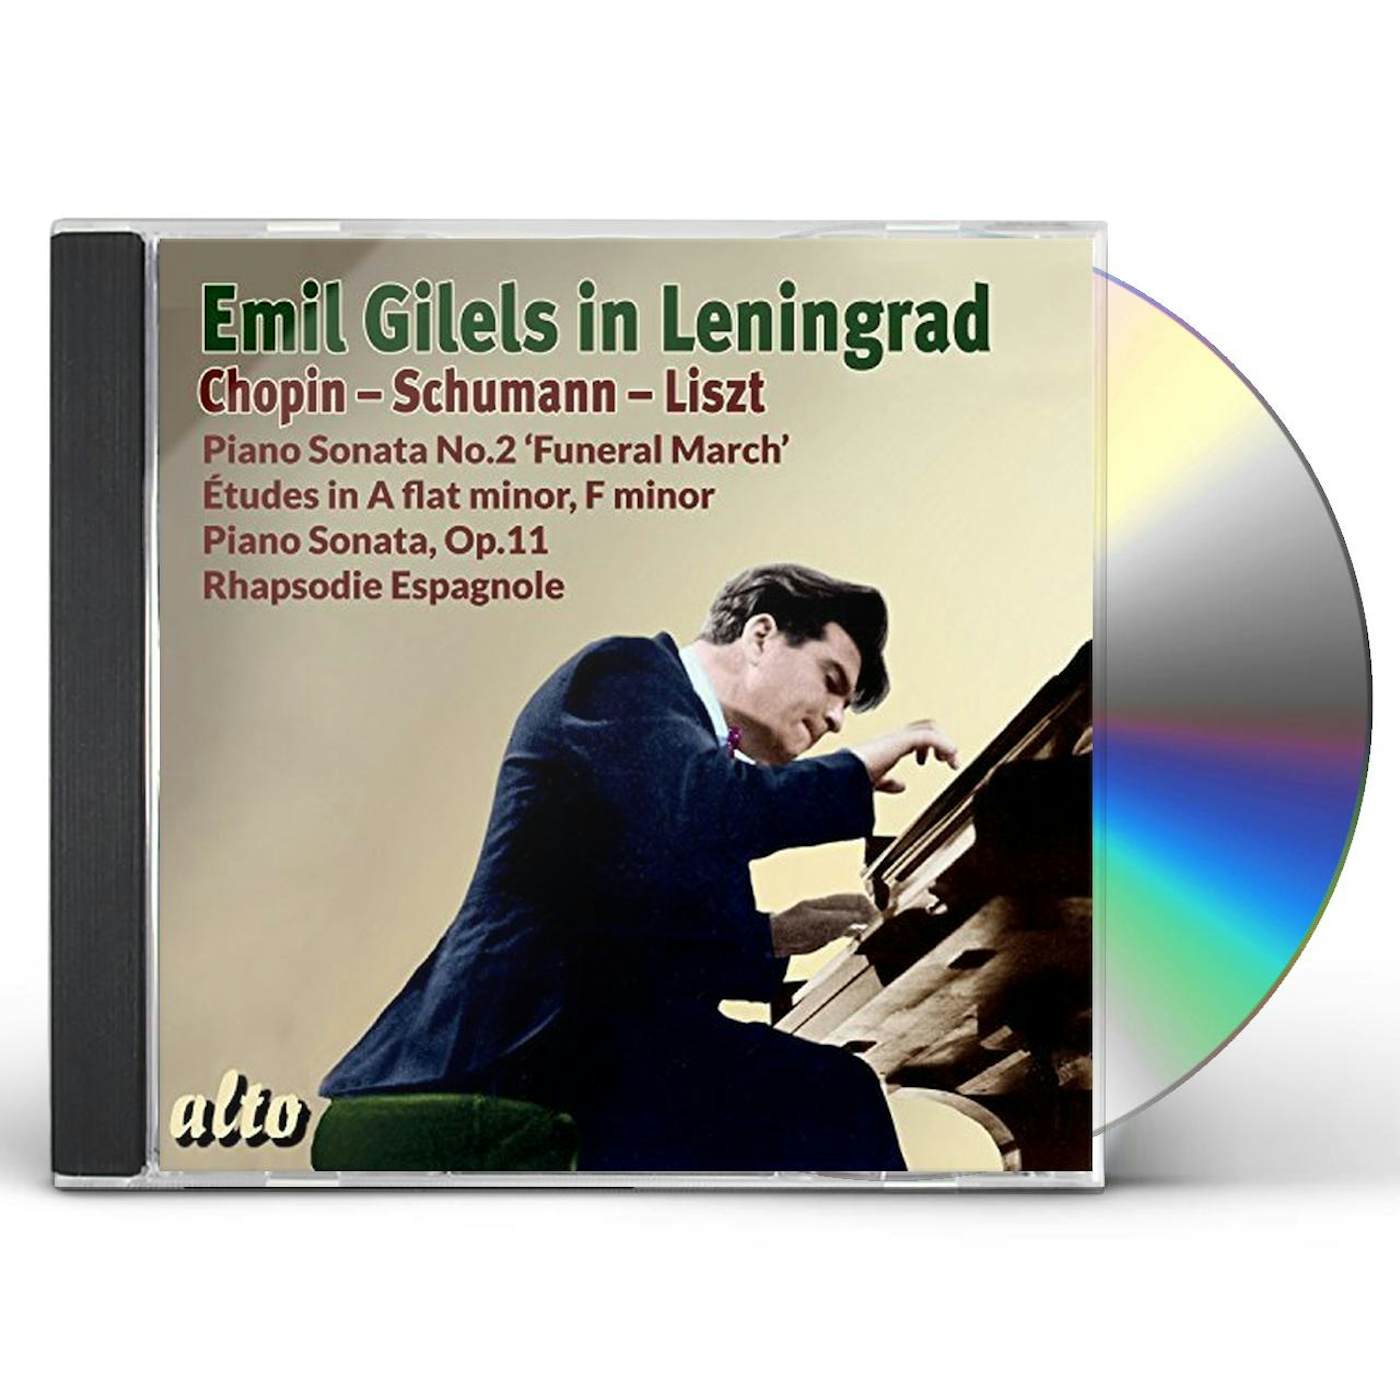 EMIL GILELS IN LENINGRAD CD